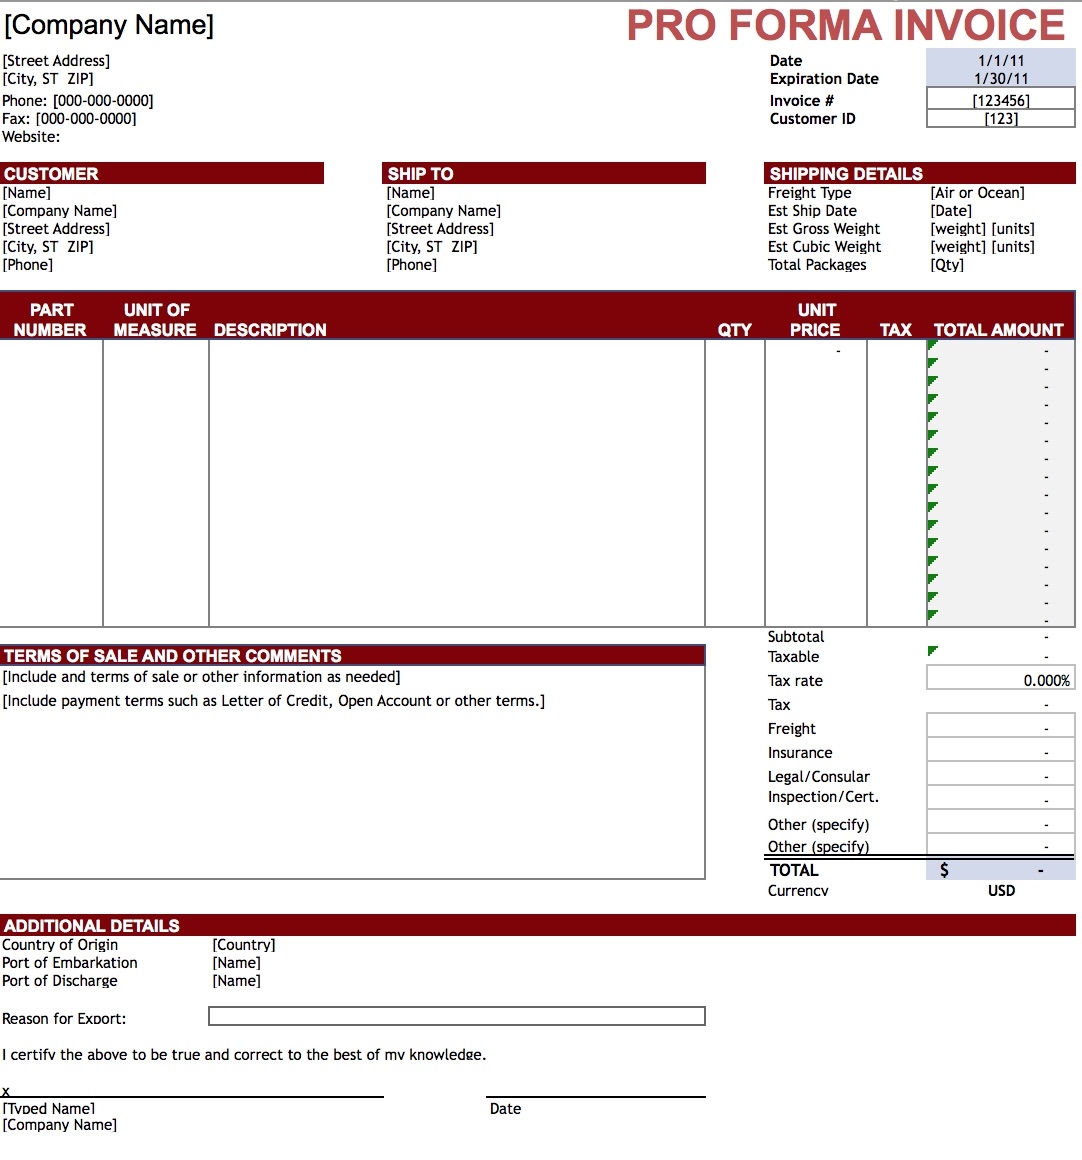 proforma invoice sample excel free pro forma invoice template excel pdf word doc 1082 X 1160